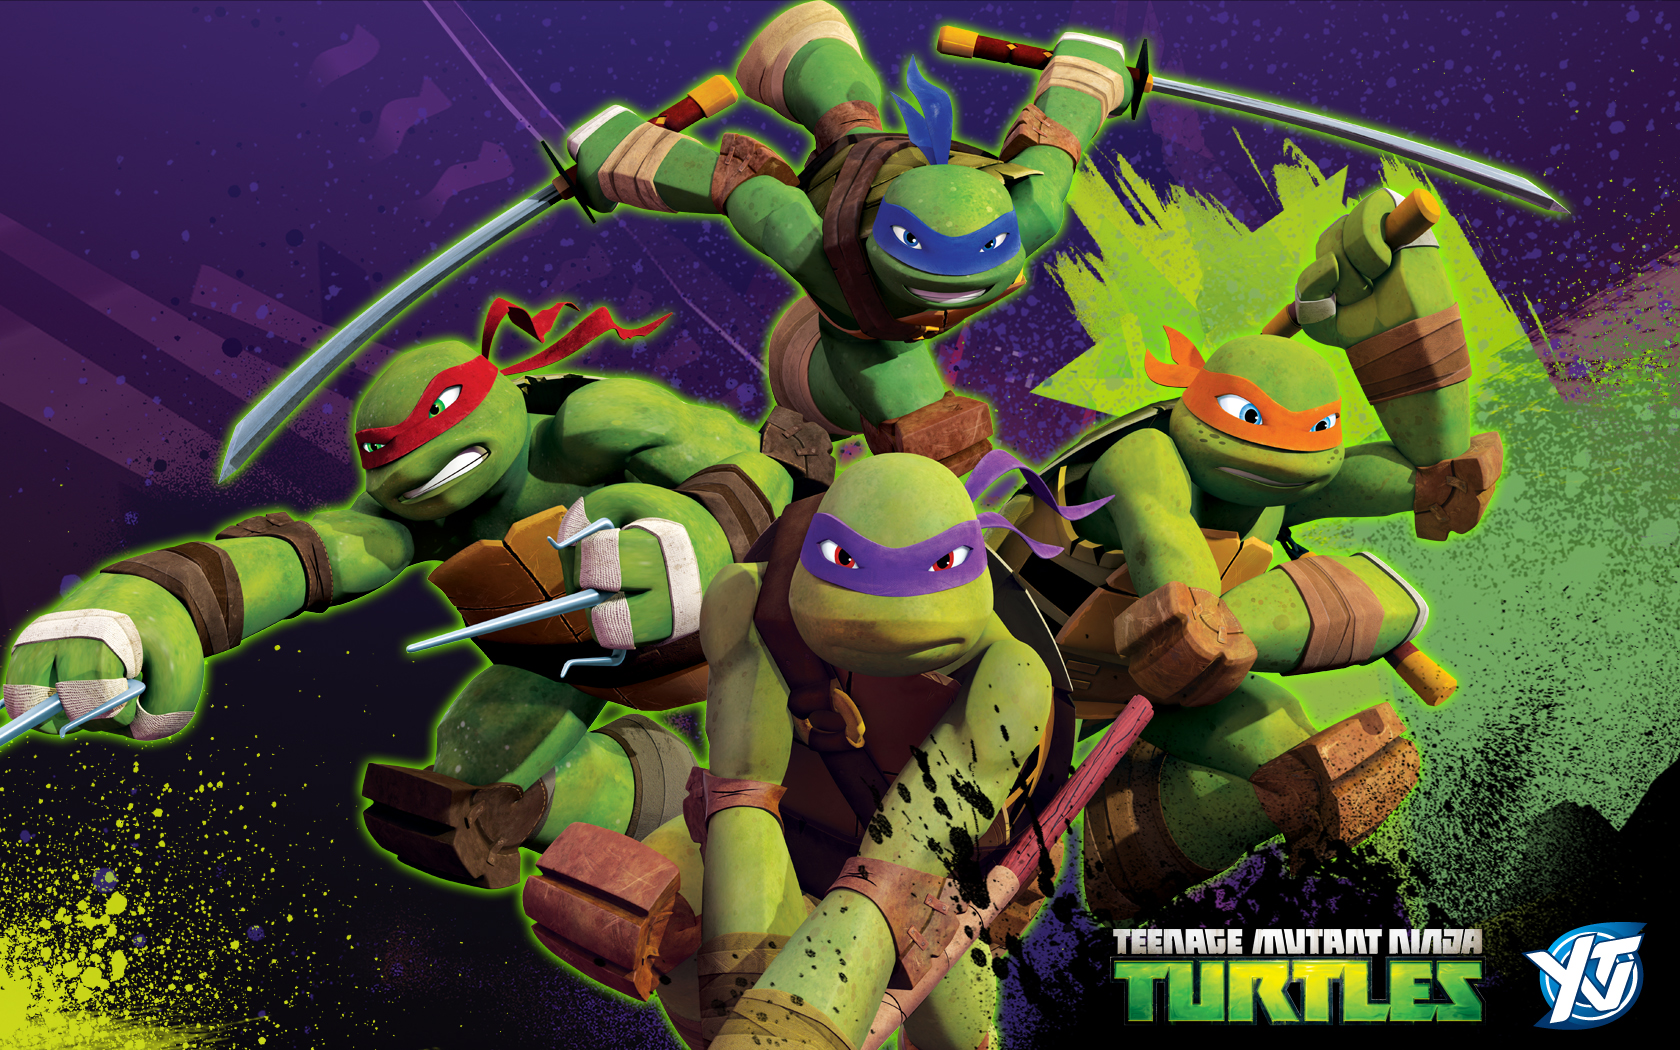 Teenage Mutant Ninja Turtles Wallpaper Image Amp Pictures